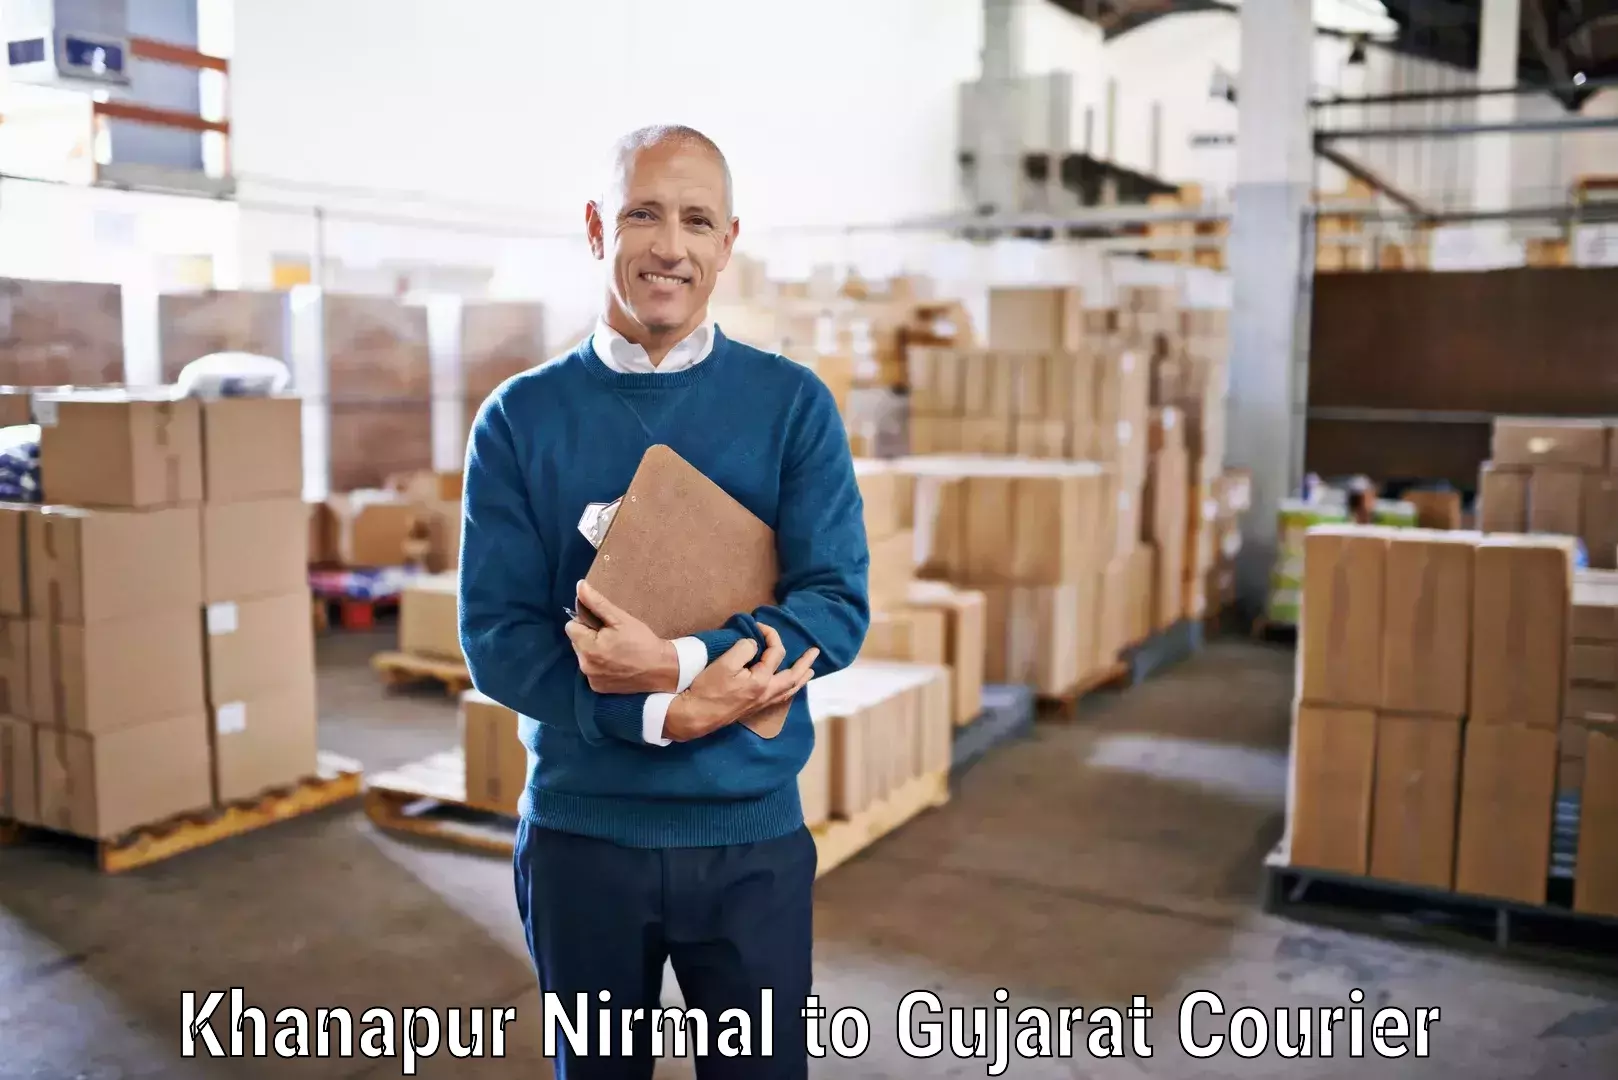 Affordable parcel service Khanapur Nirmal to Hansot